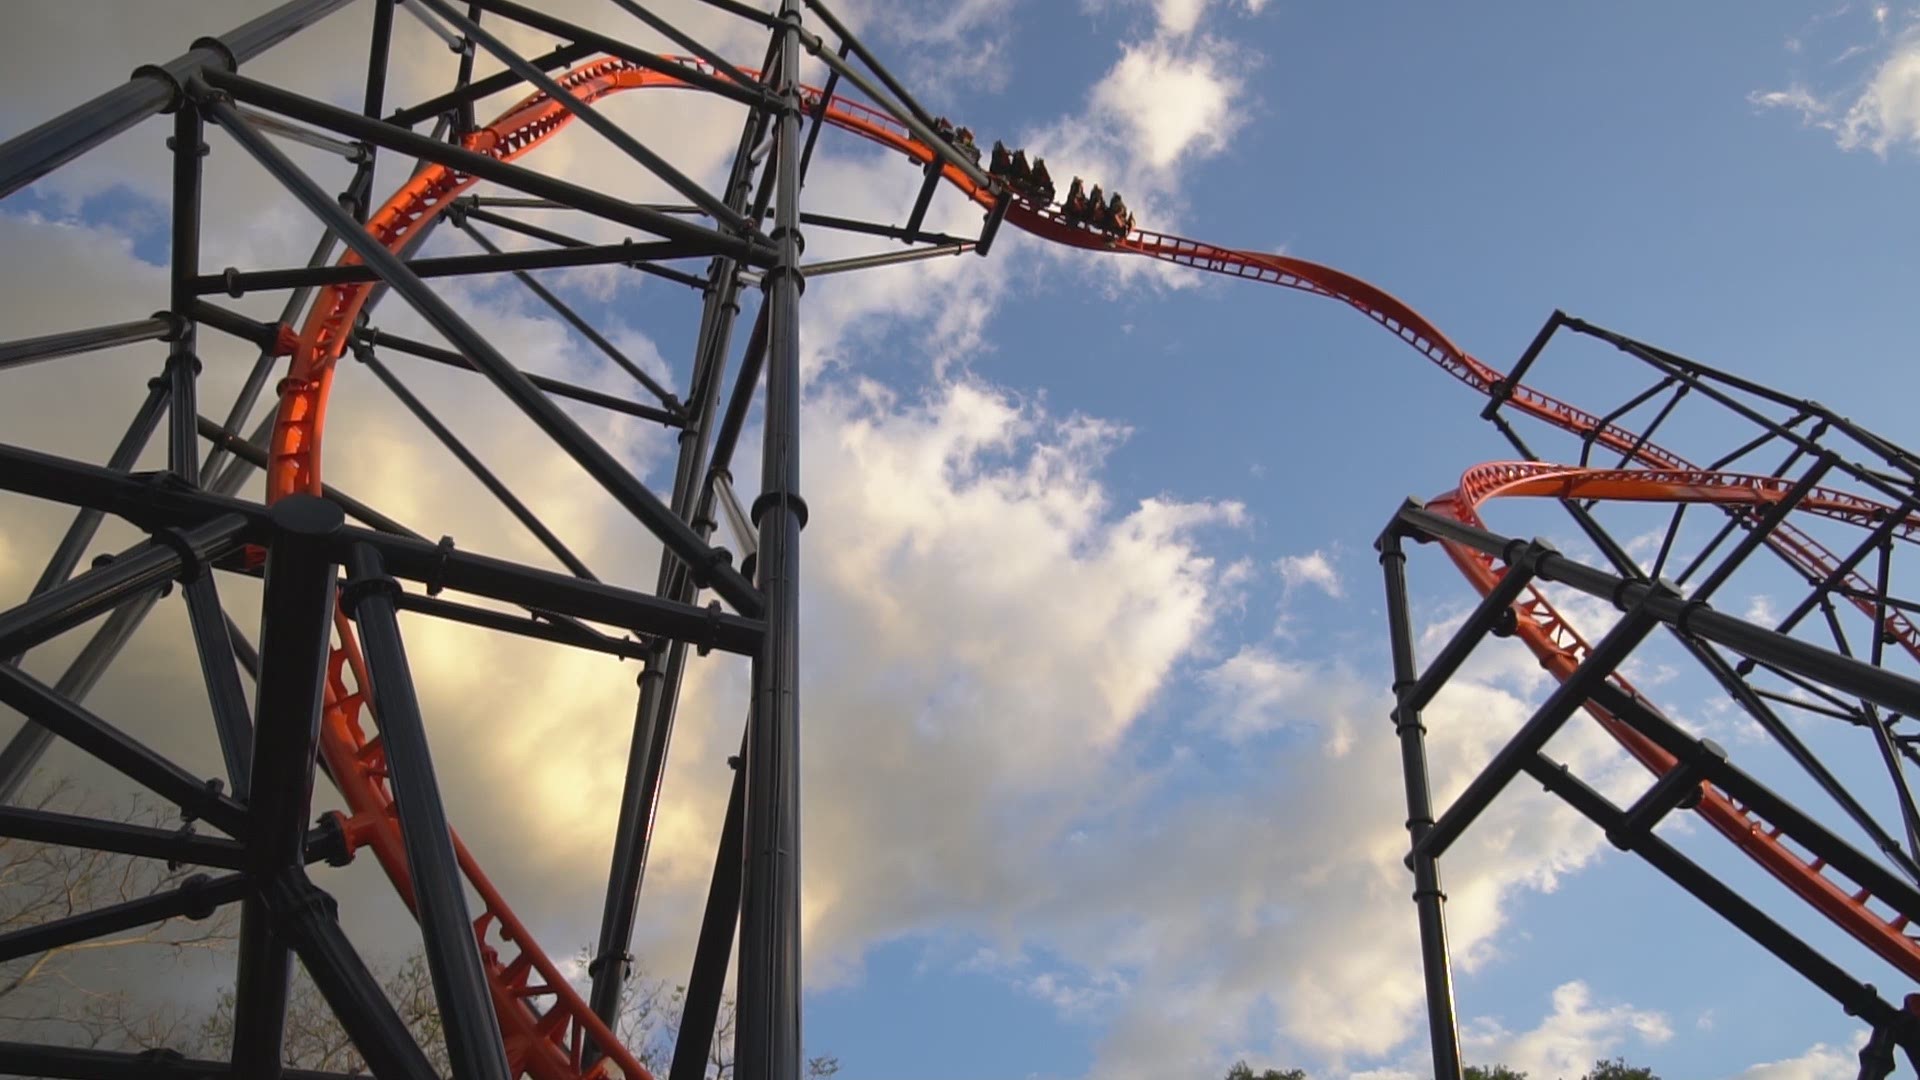 Busch Gardens' newest coaster Tigris will open April 19. https://on.wtsp.com/2RYQJaB